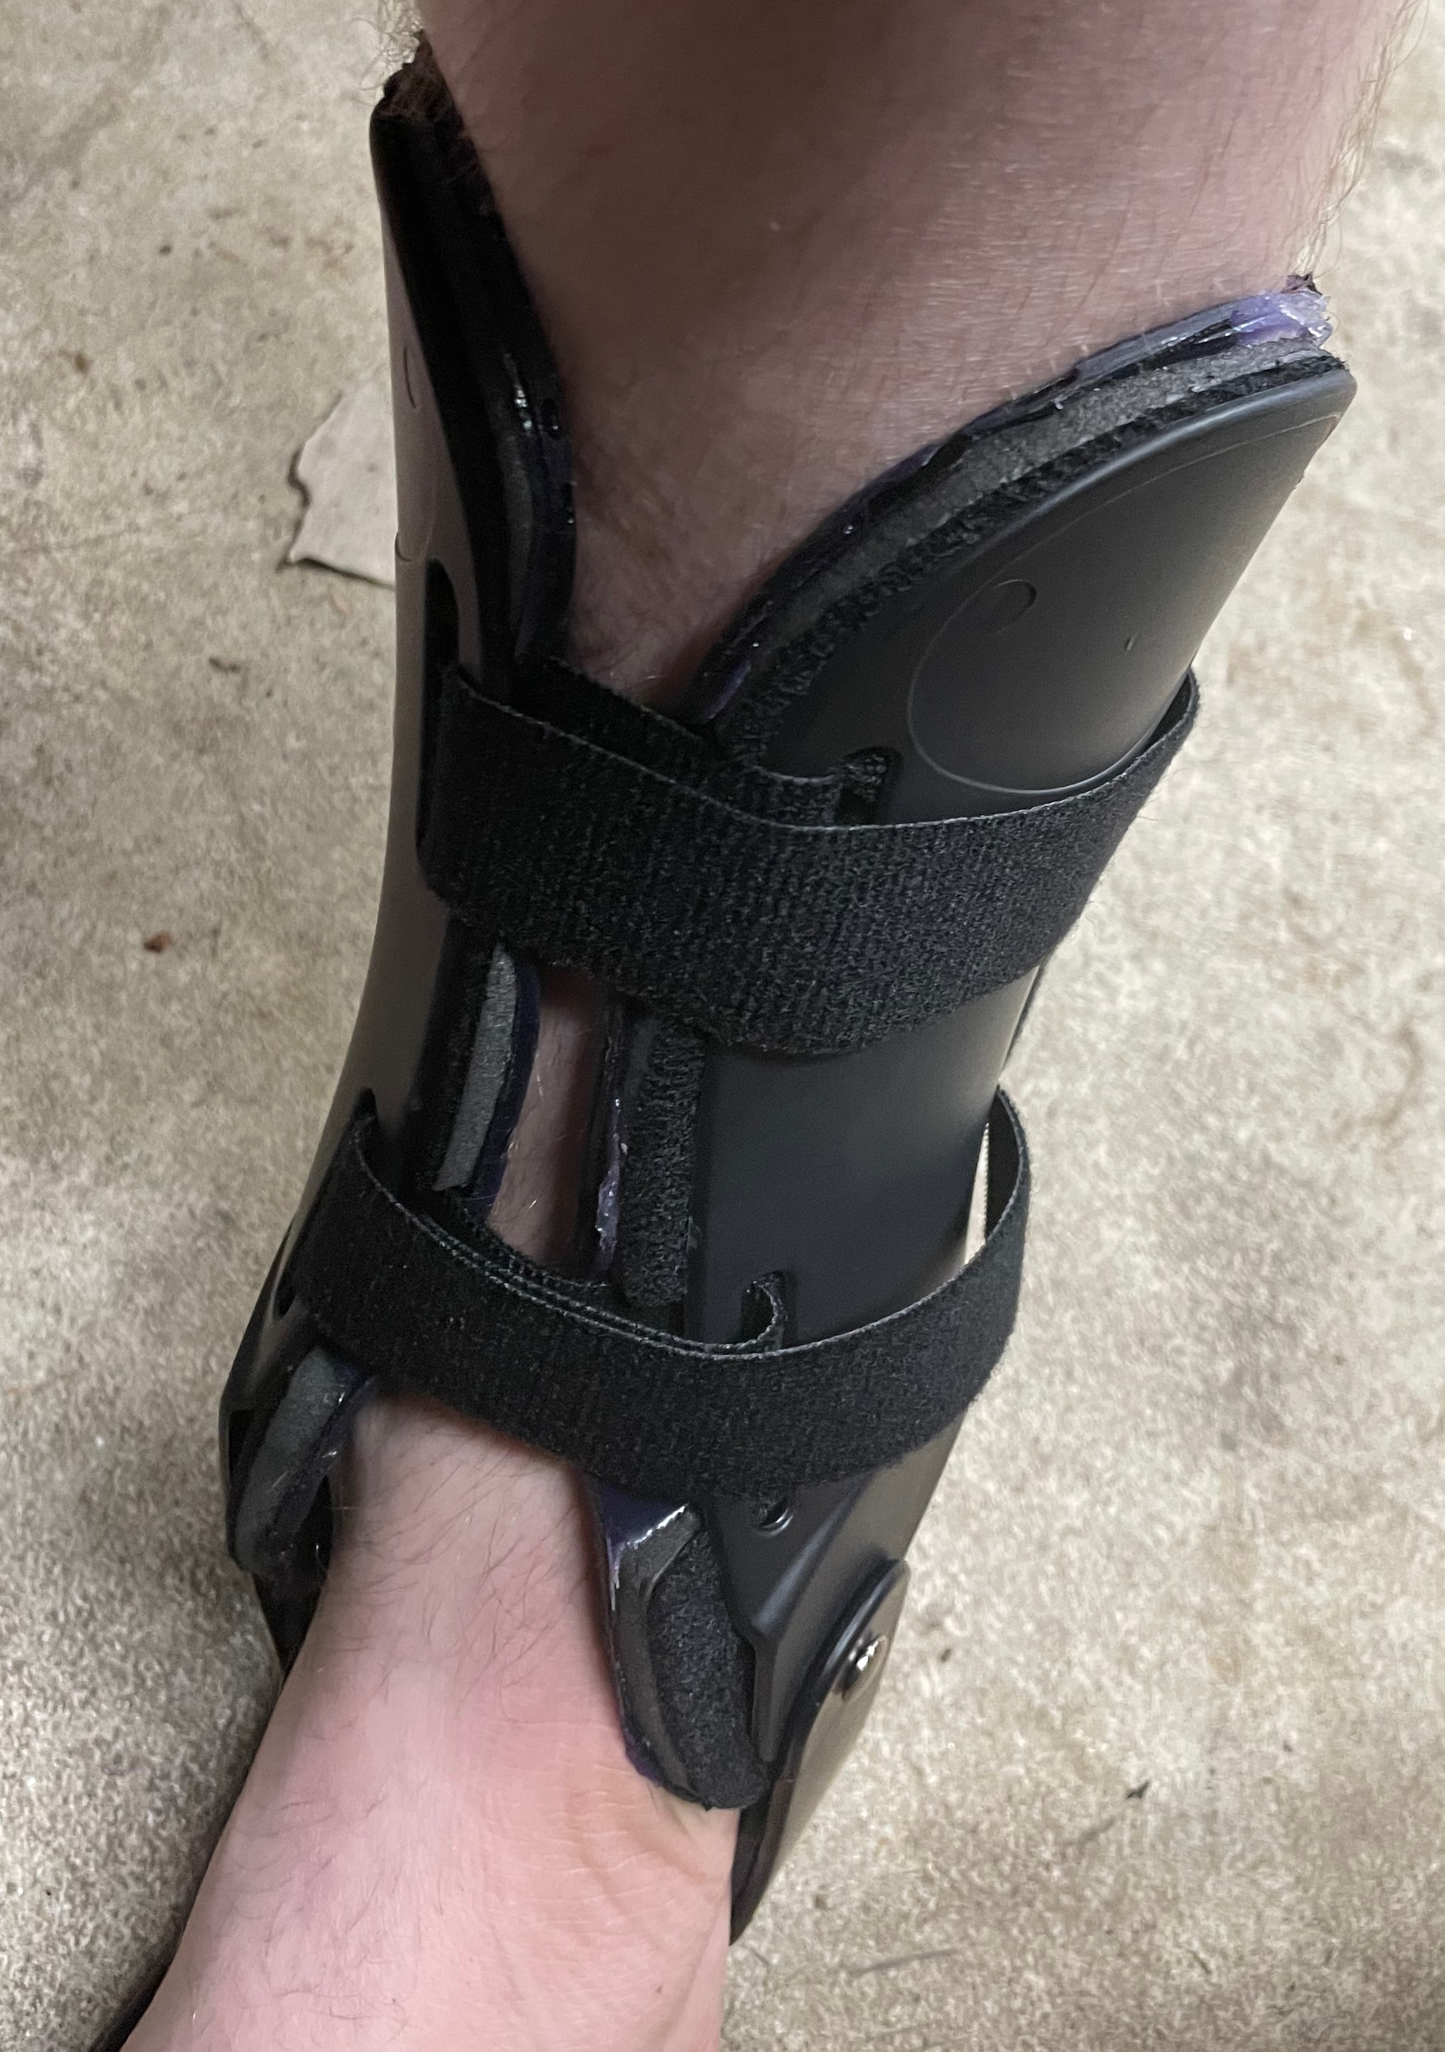 Comfort Ankle Offloading brace